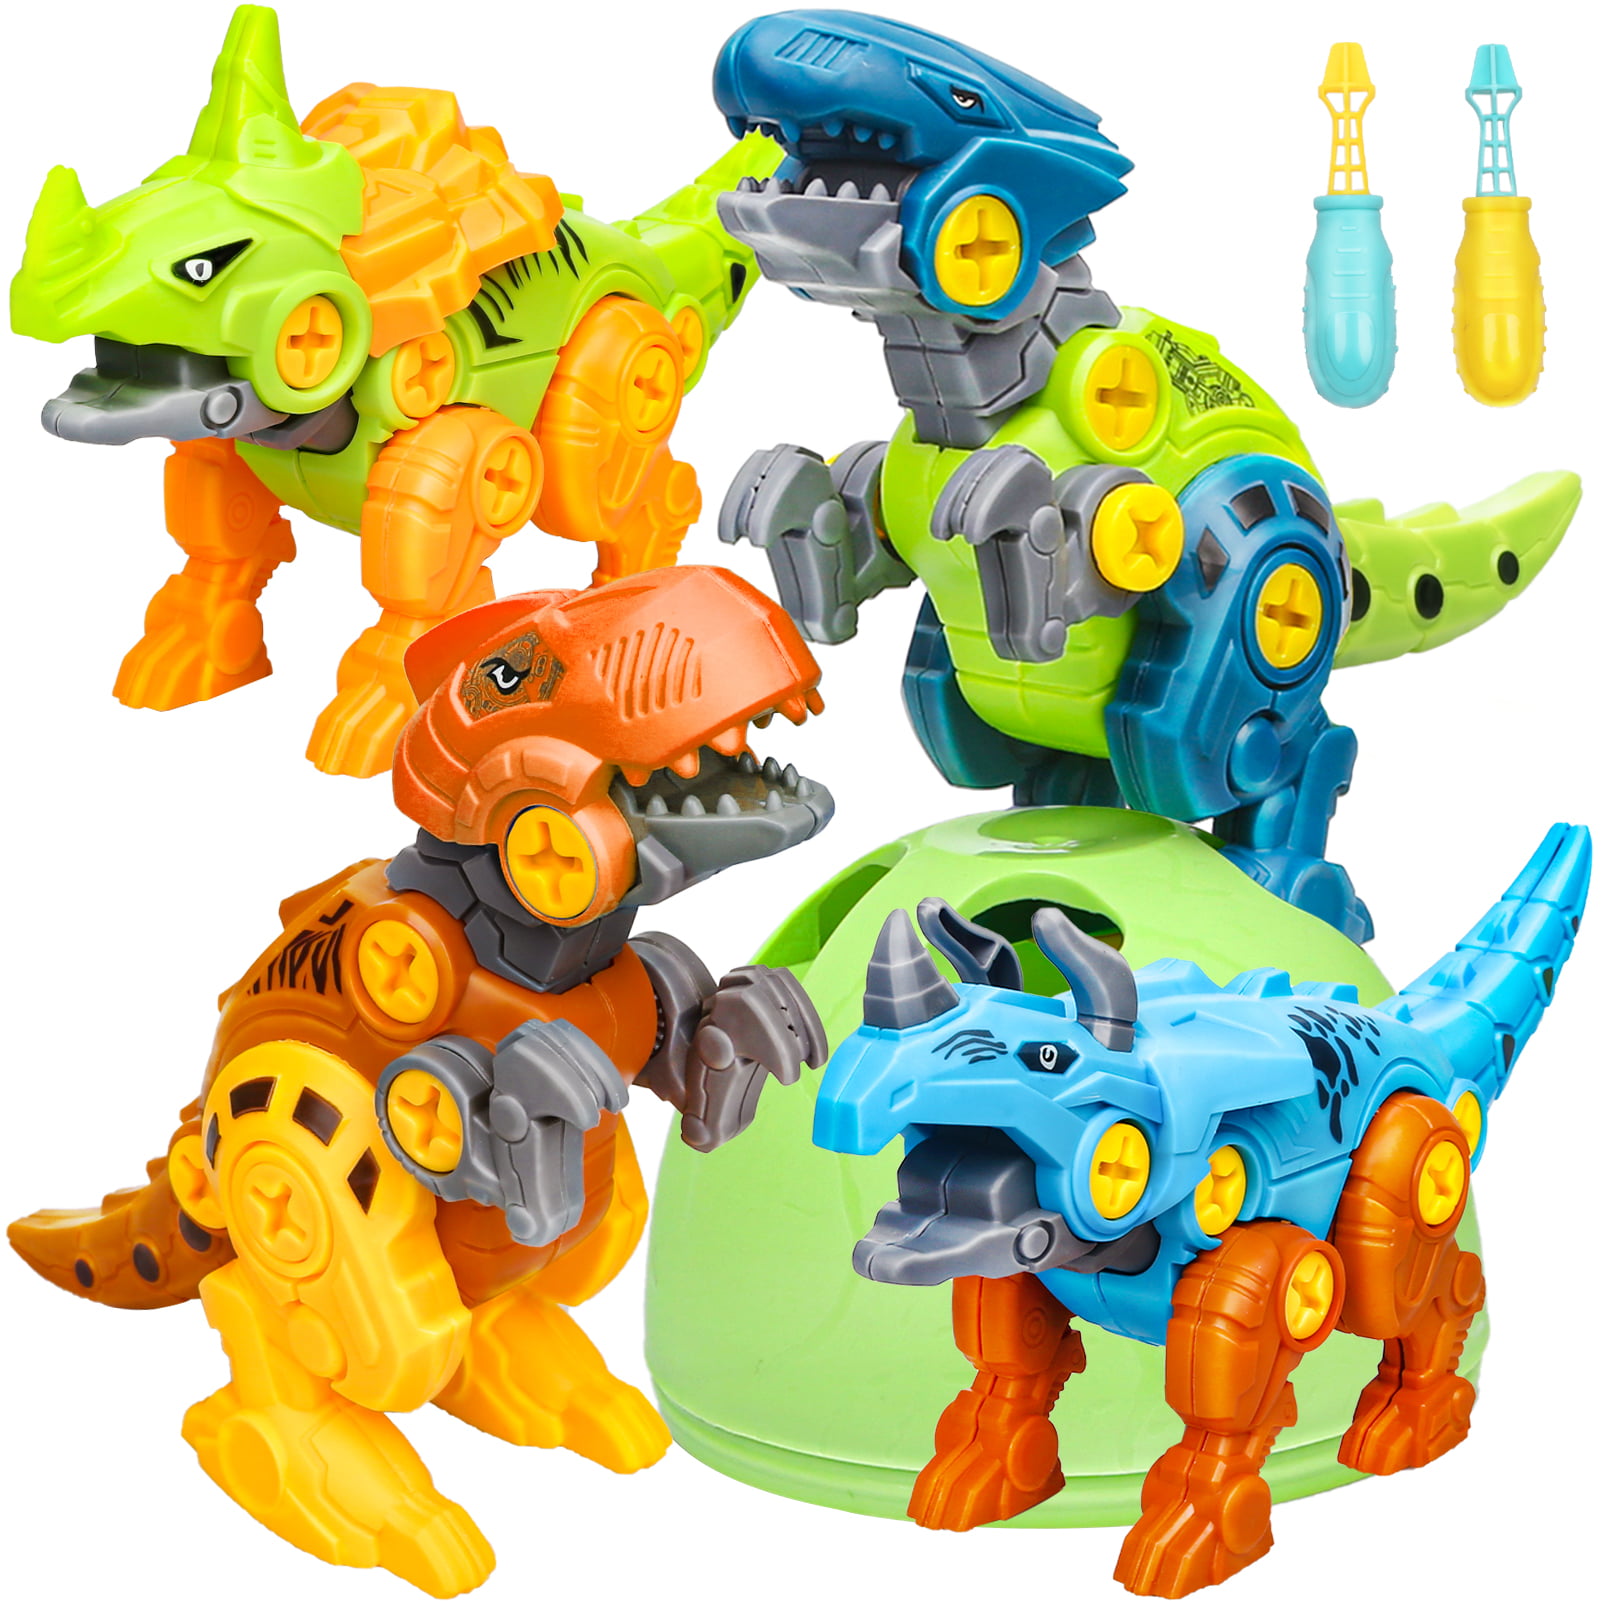 Sanlebi Take Apart Dinosaur Toys for Boys 3-6 Years,STEM Toy